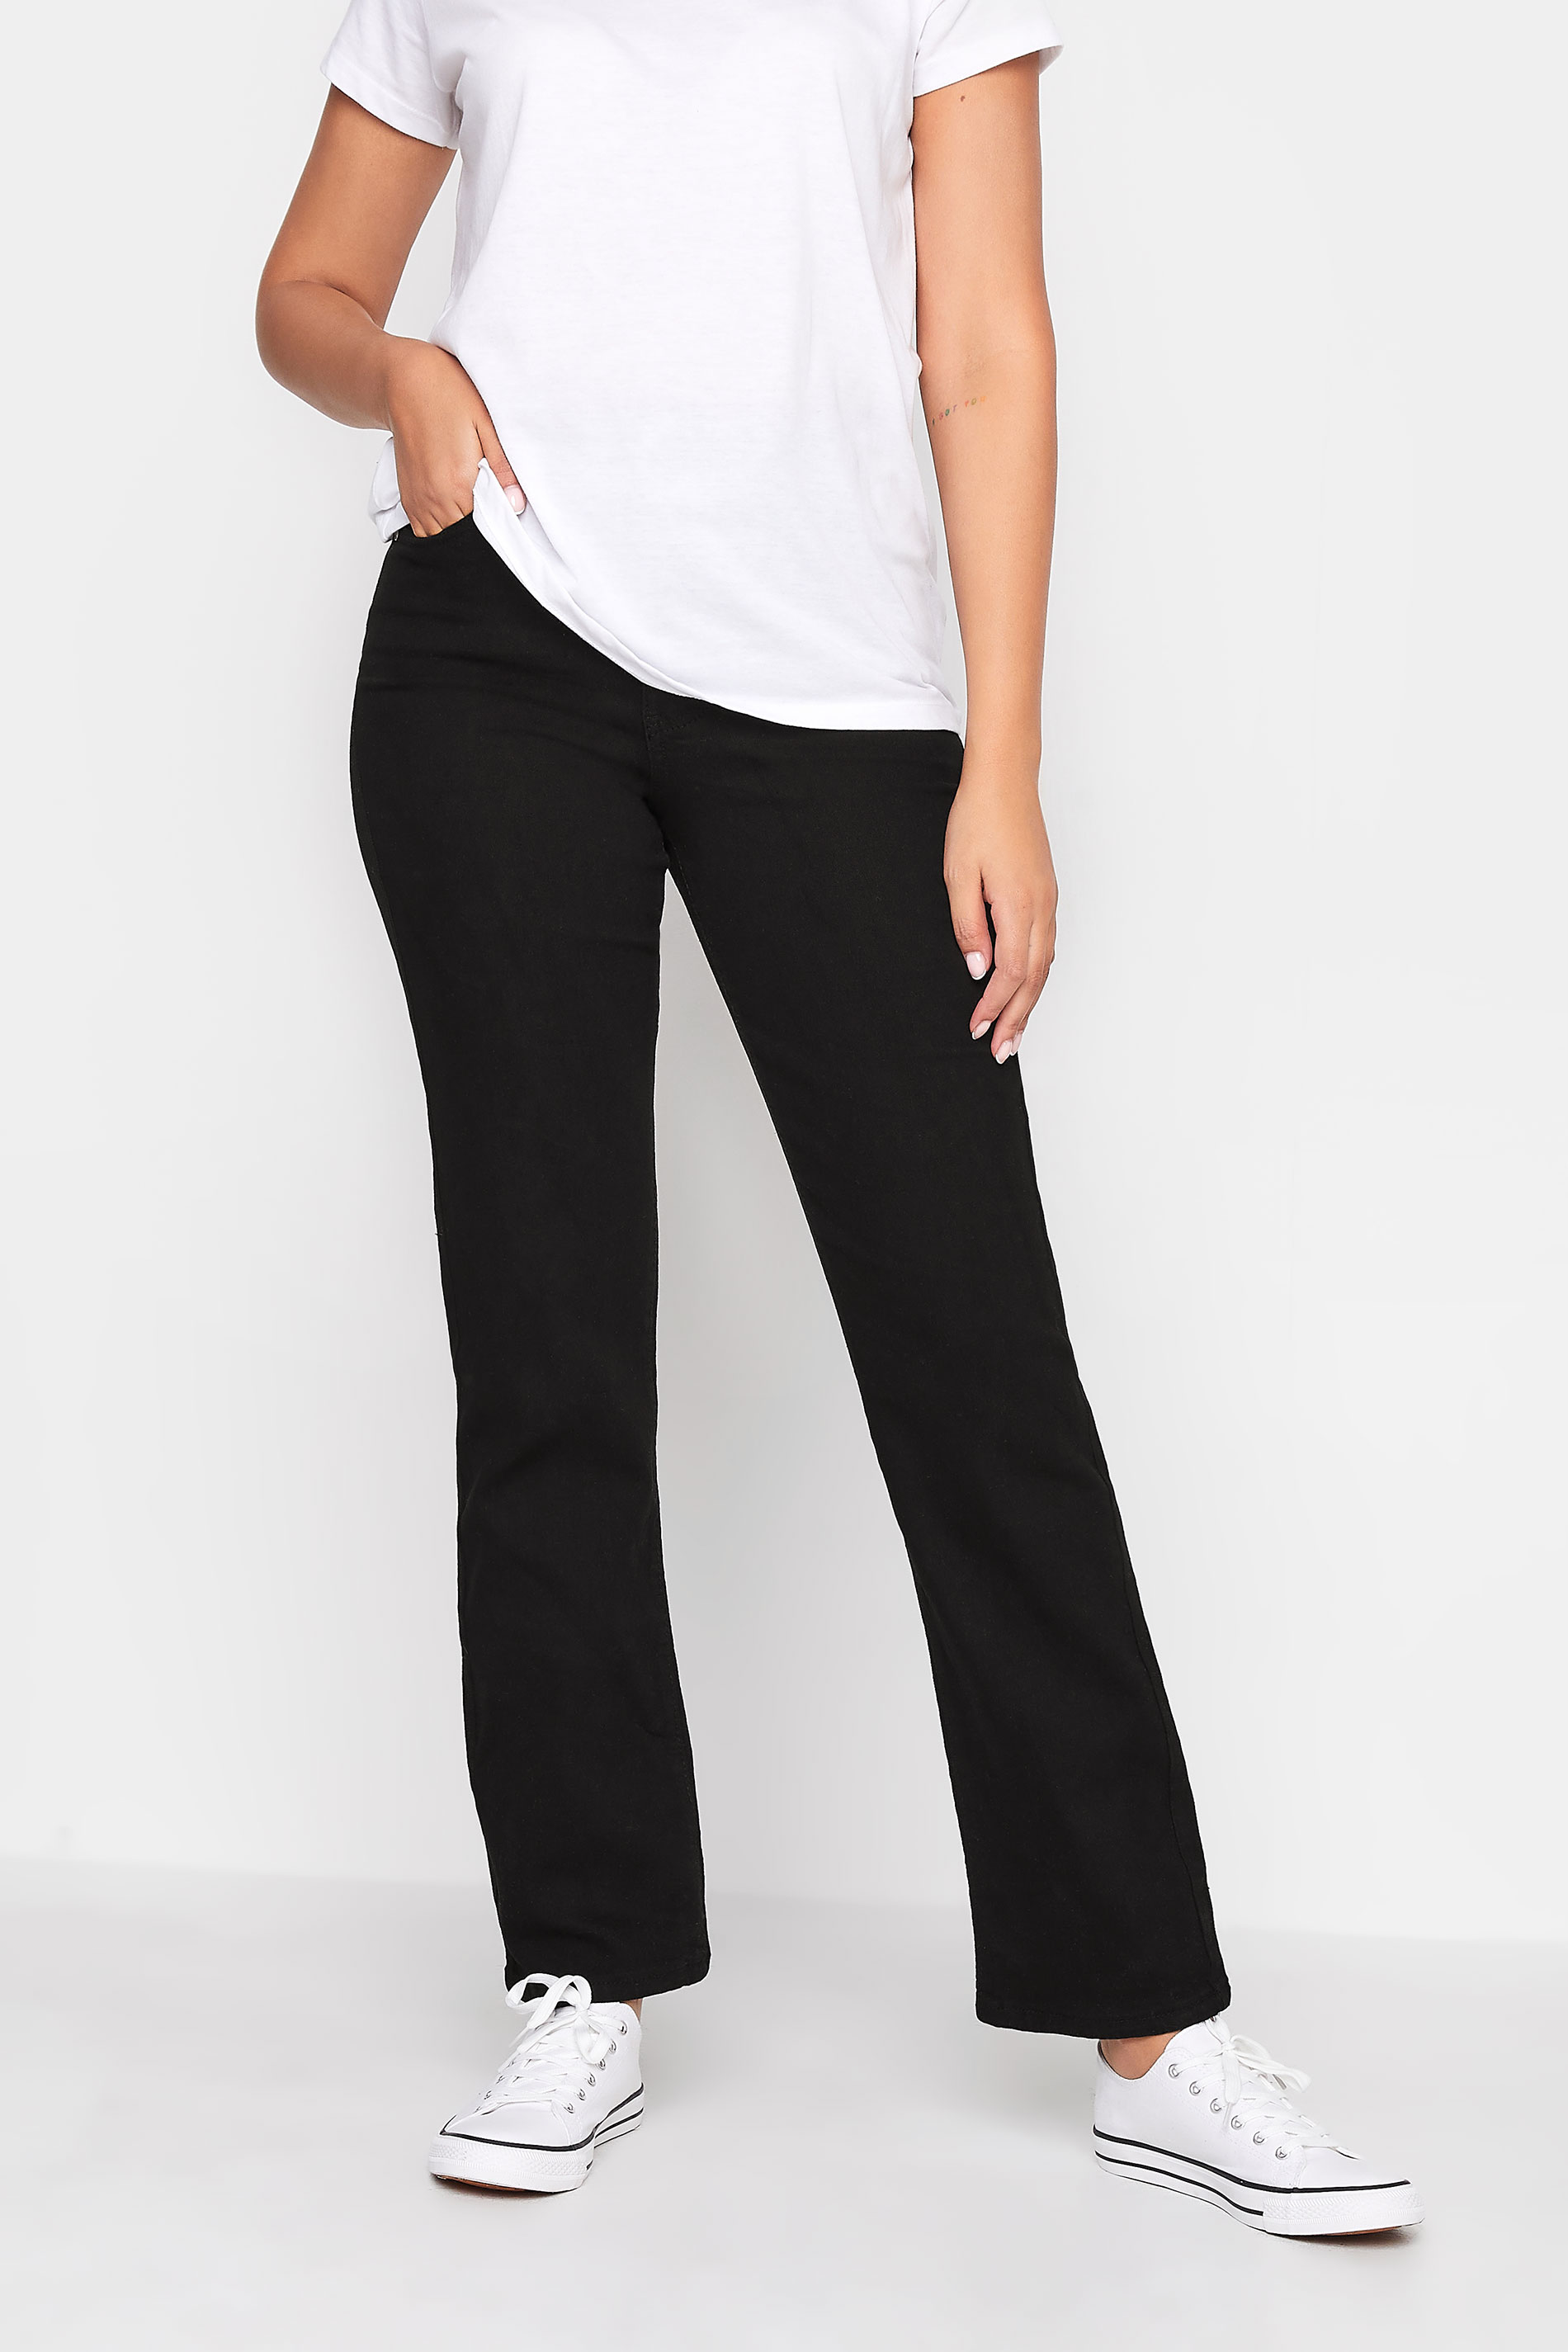 LTS Tall Women's Black Straight Leg Jeans | Long Tall Sally  2